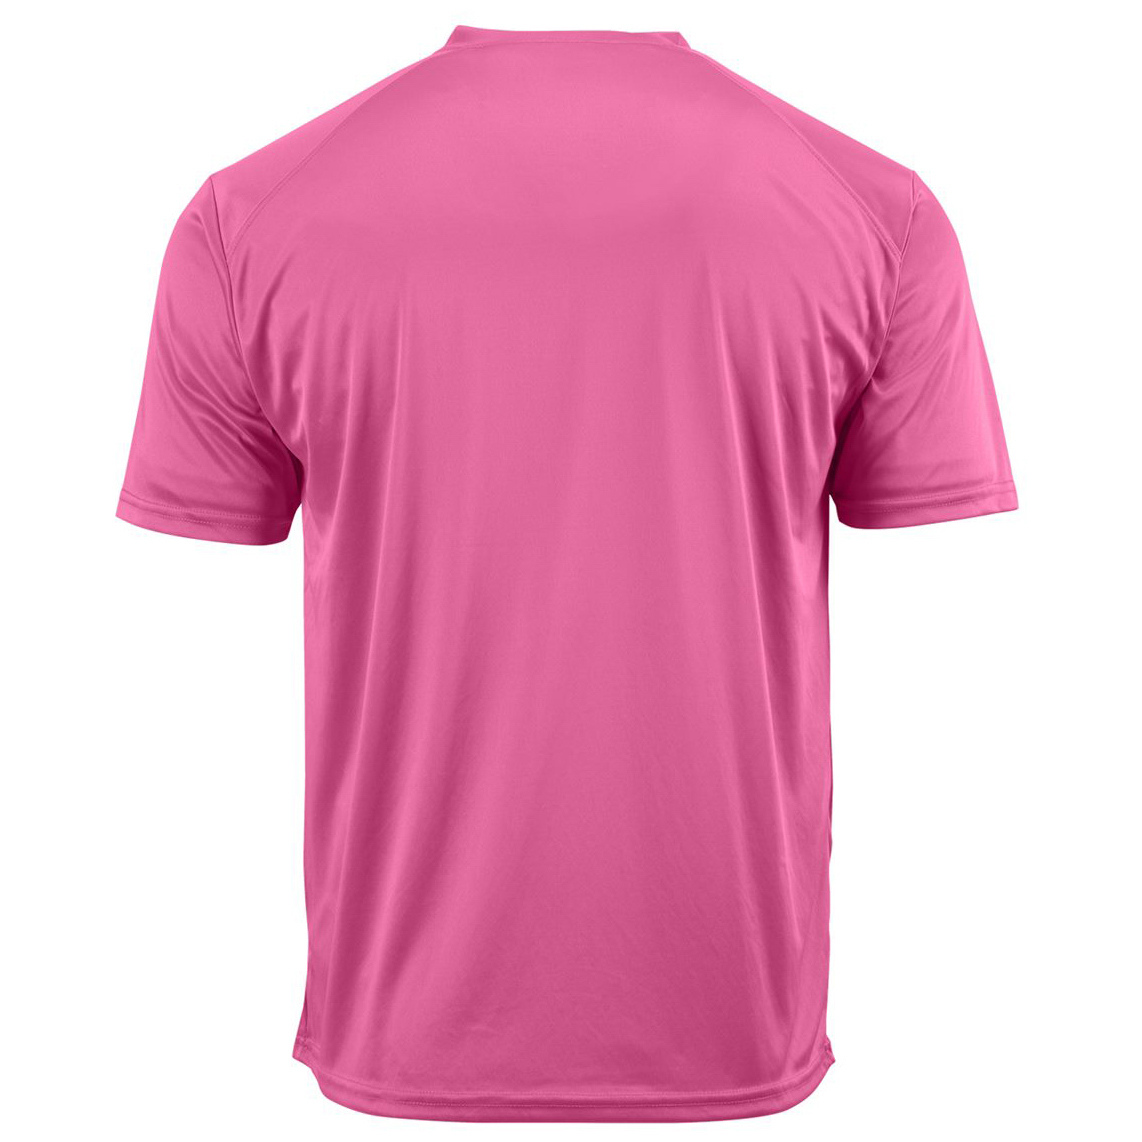 Paragon 200 Islander Performance T-Shirt - Neon Pink | Full Source